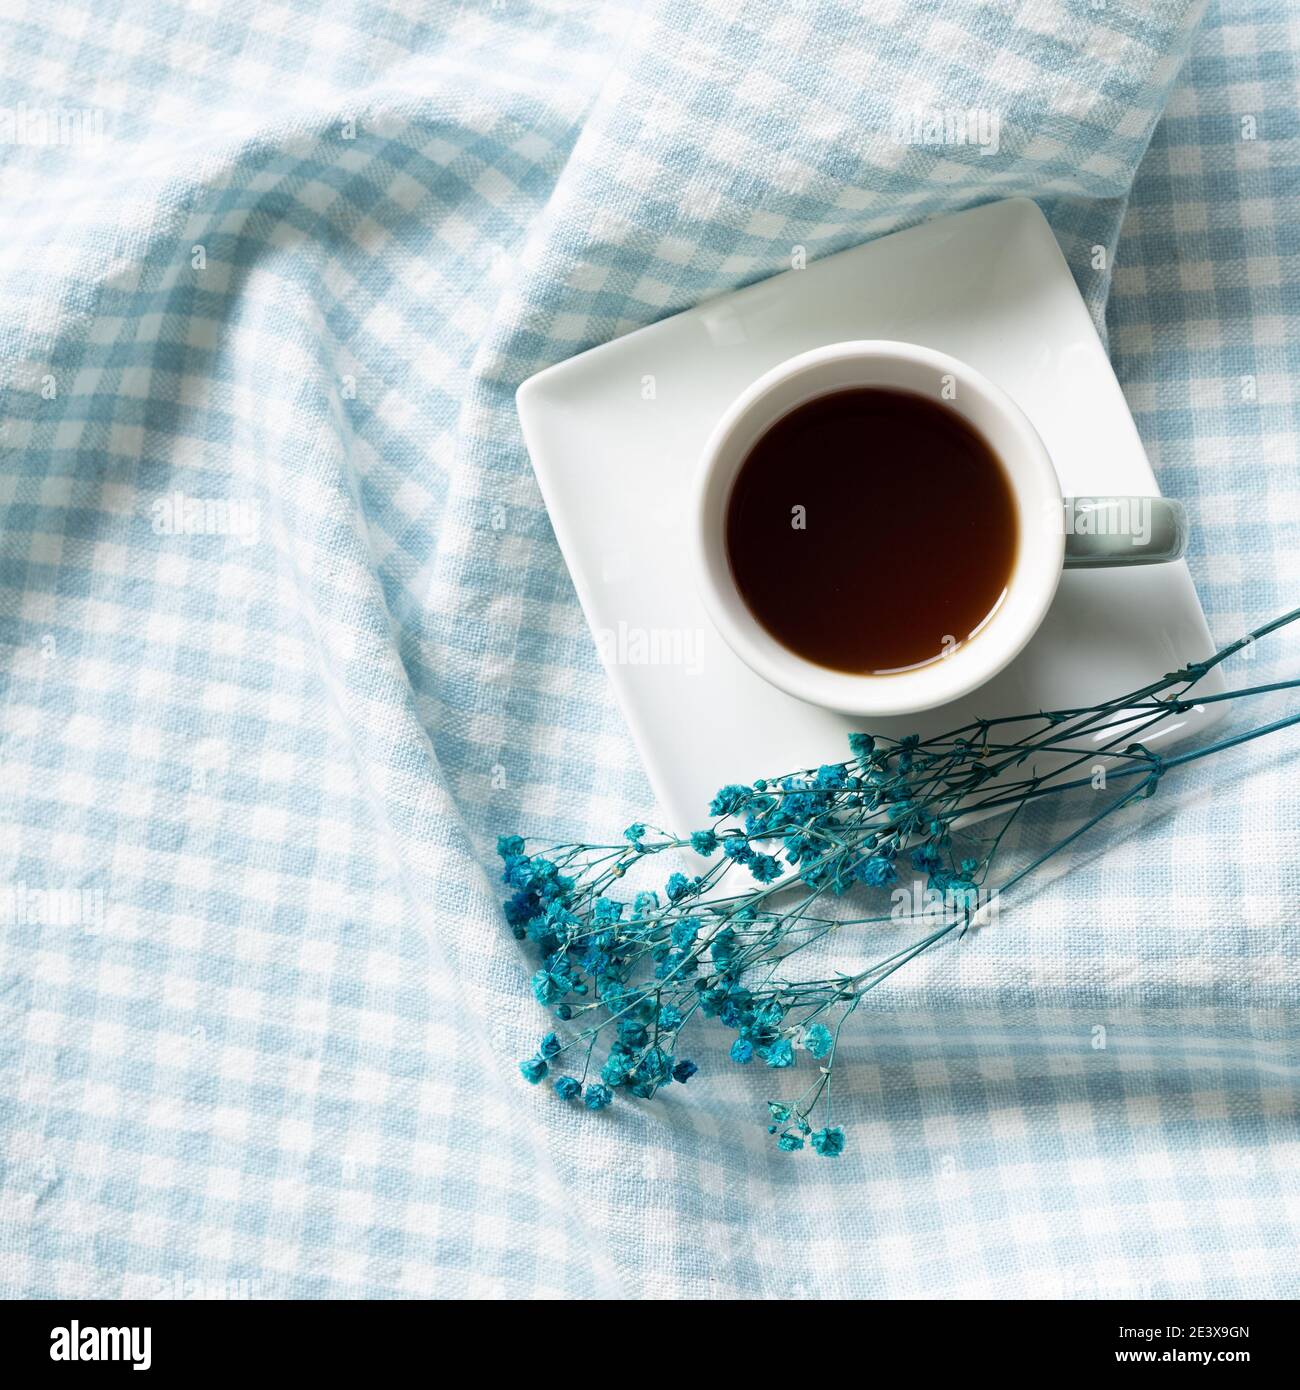 Taza de café con flores secas sobre fondo de tela azul patrón de cuadros. Vista superior, espacio de copia Foto de stock